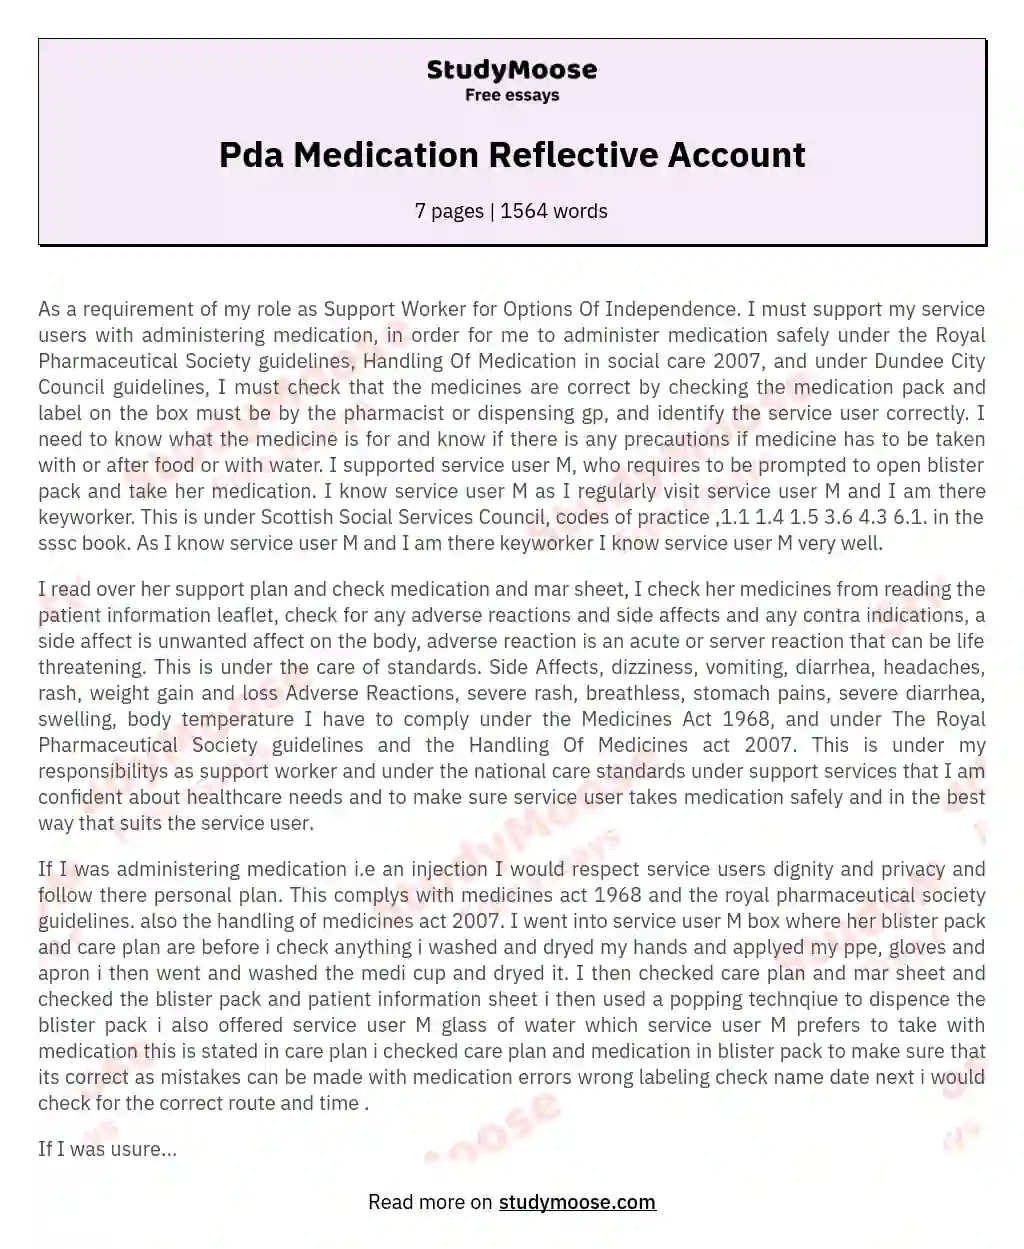 Pda Medication Reflective Account essay